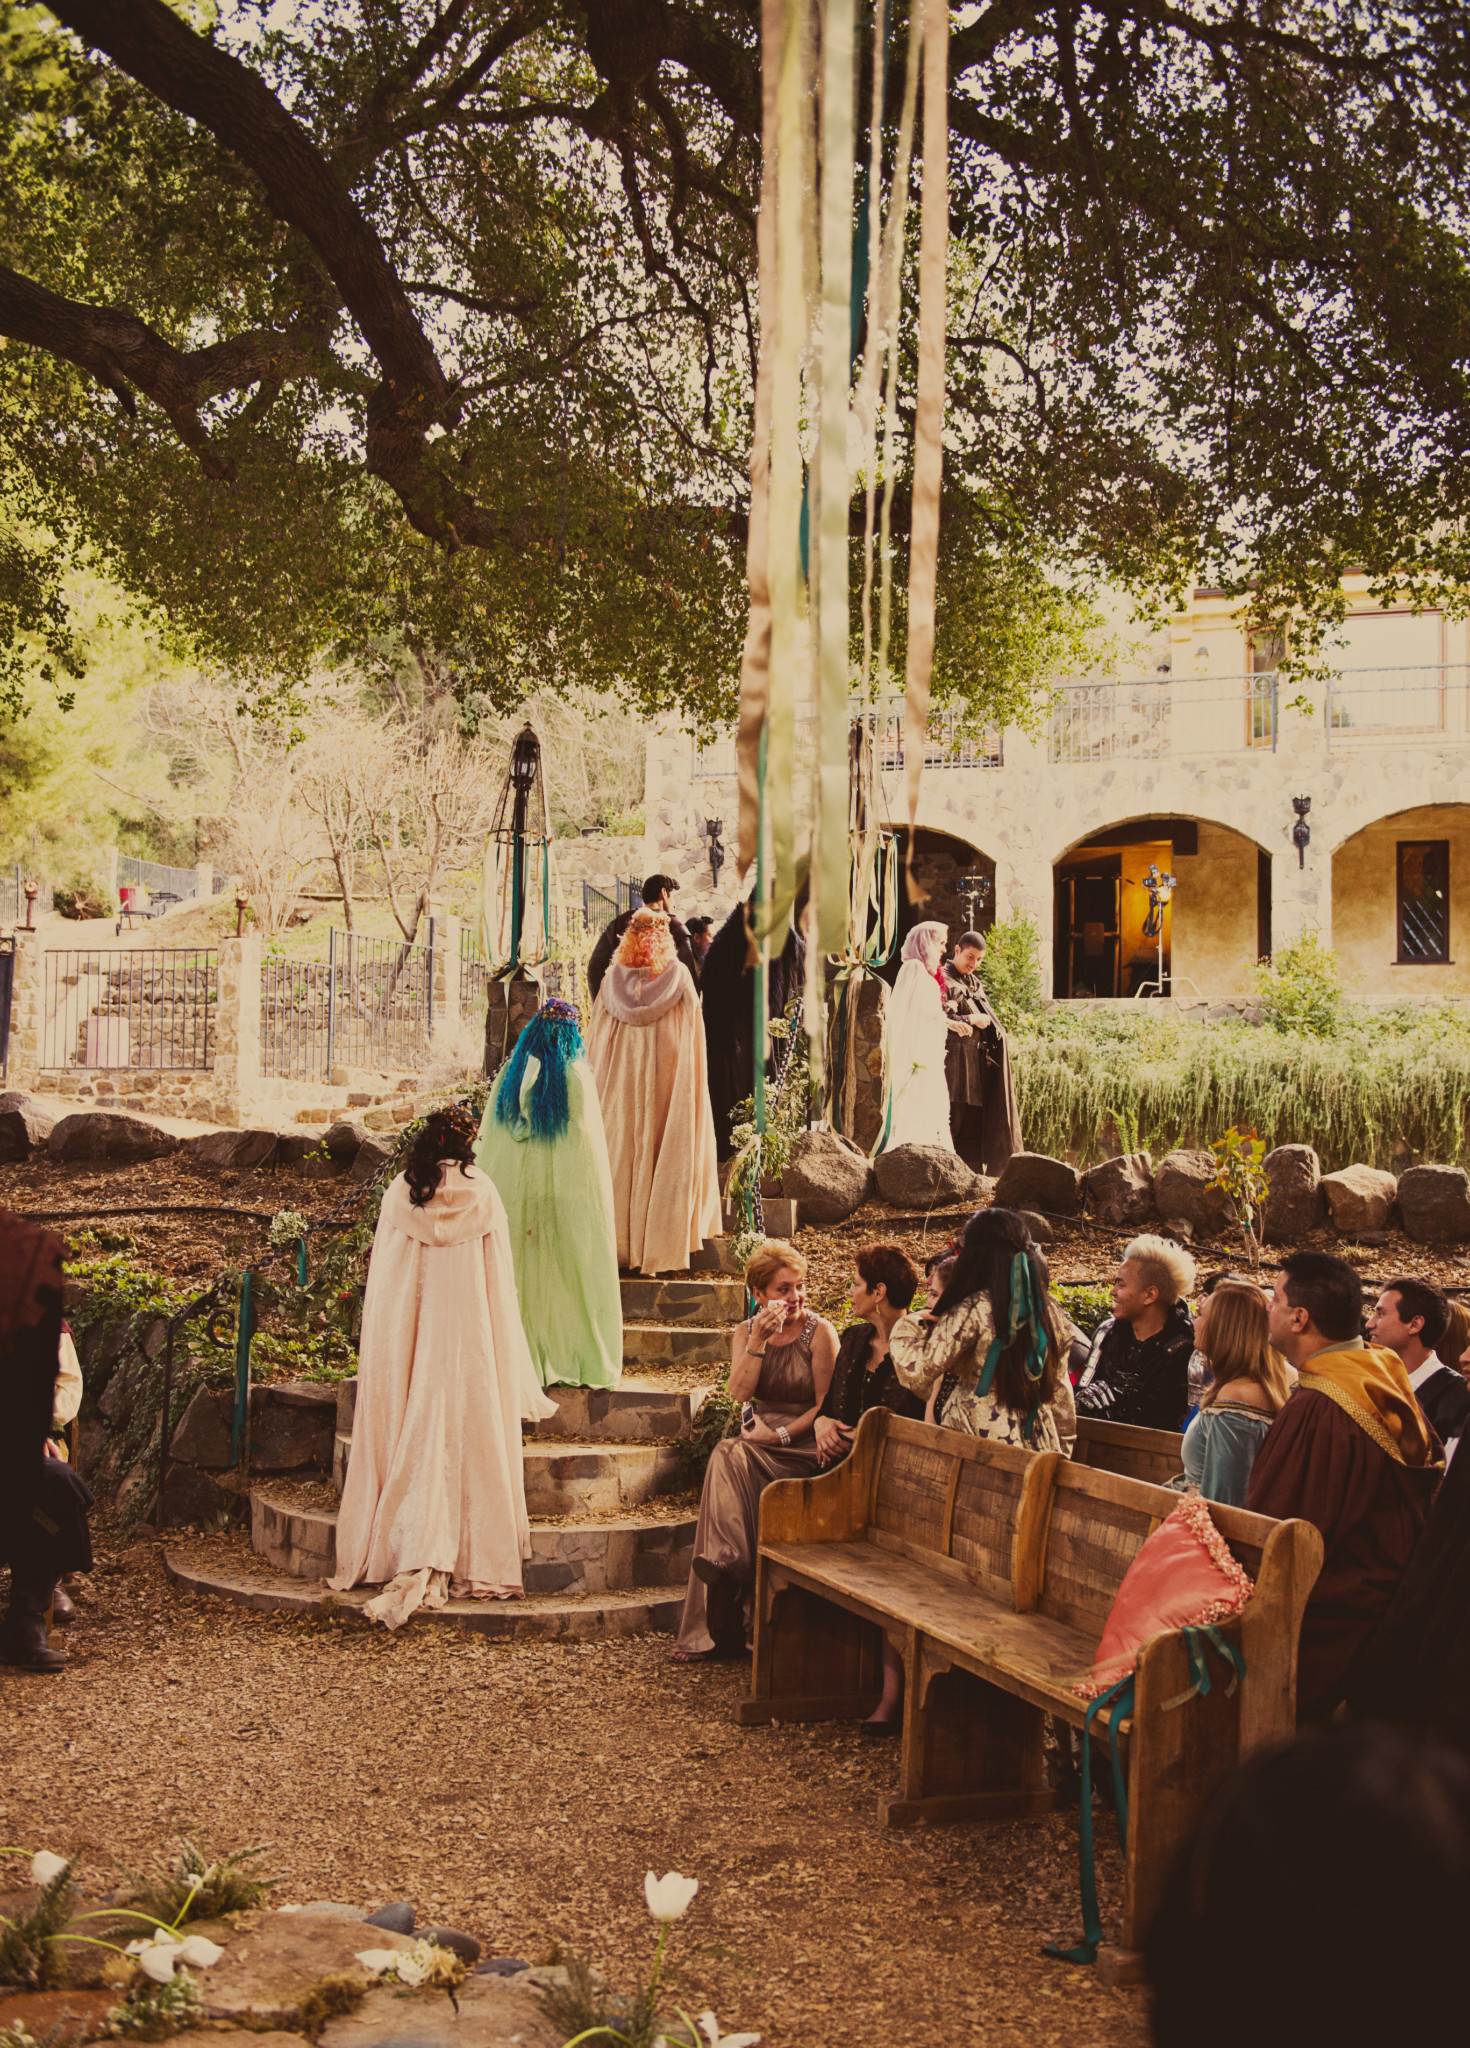 medieval decor, outdoor ceremony, inspired wedding, bride, groom